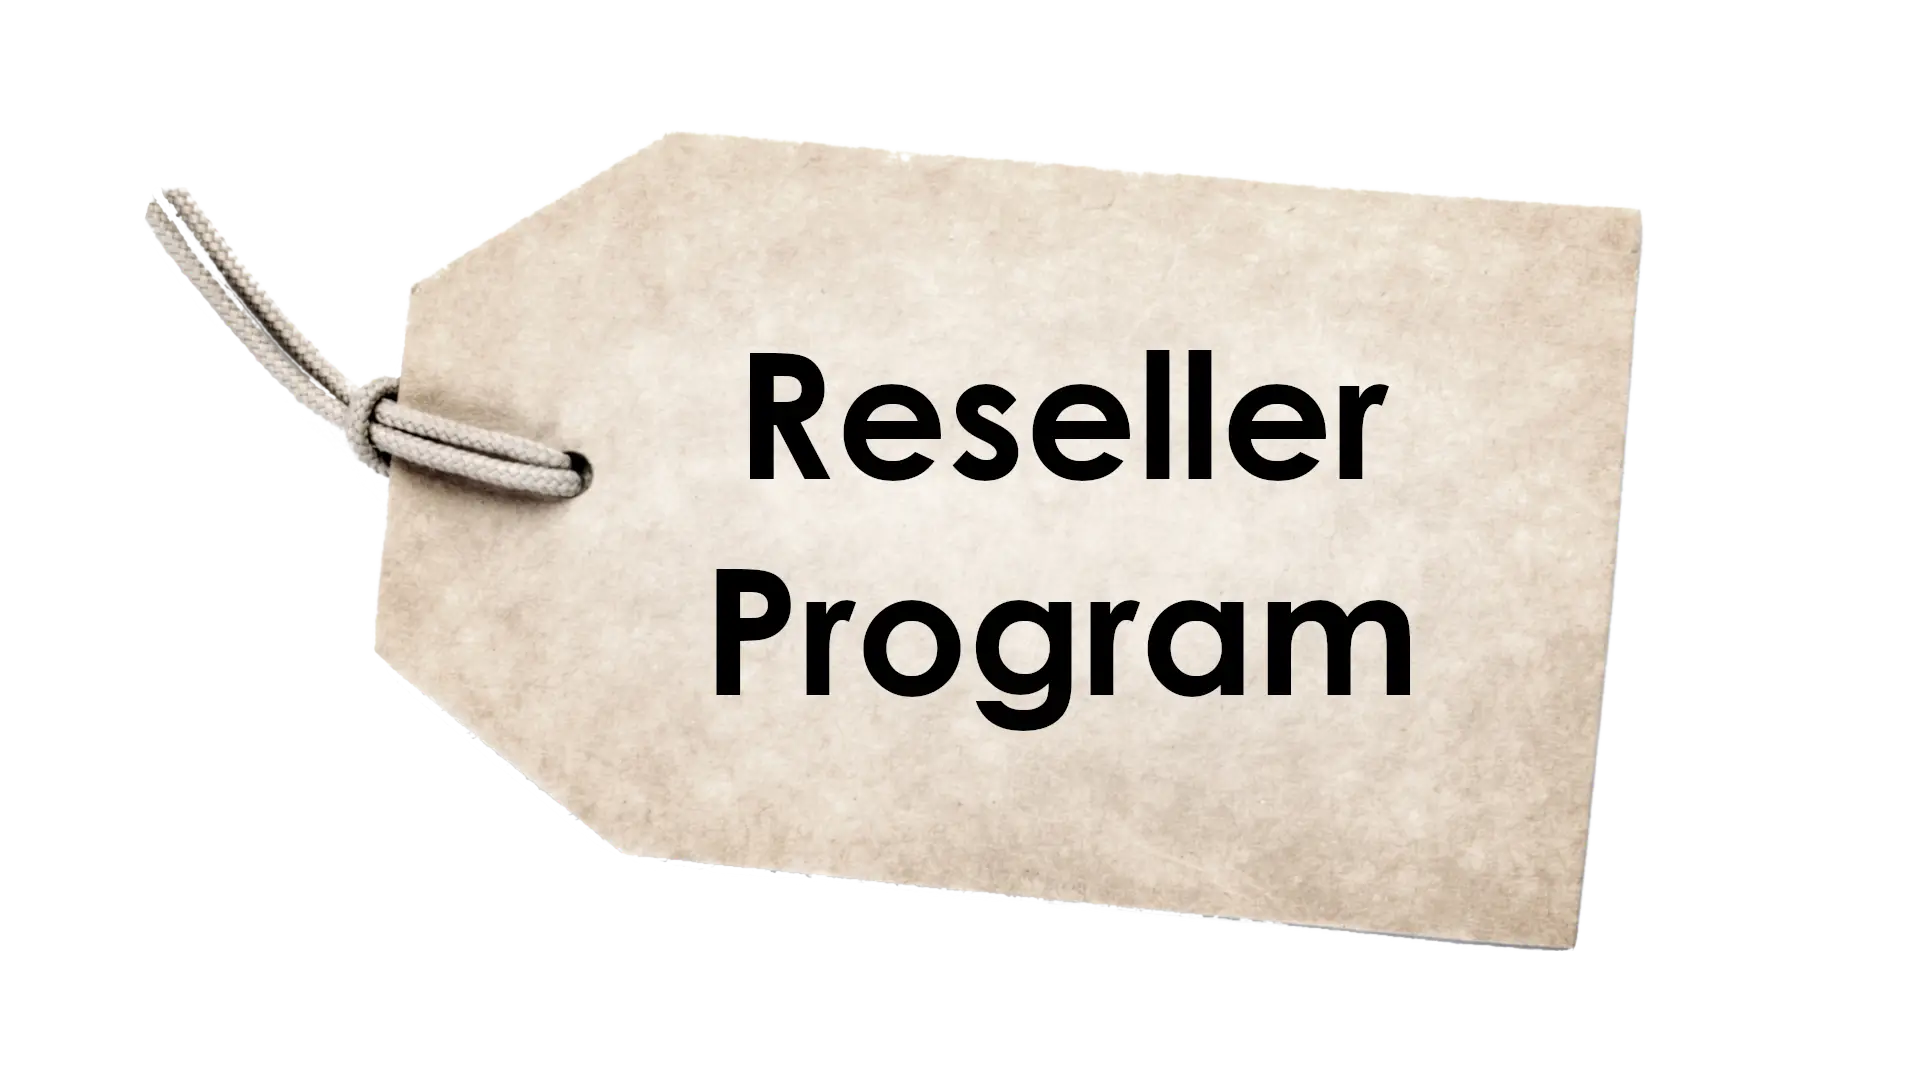 Reseller Program Available